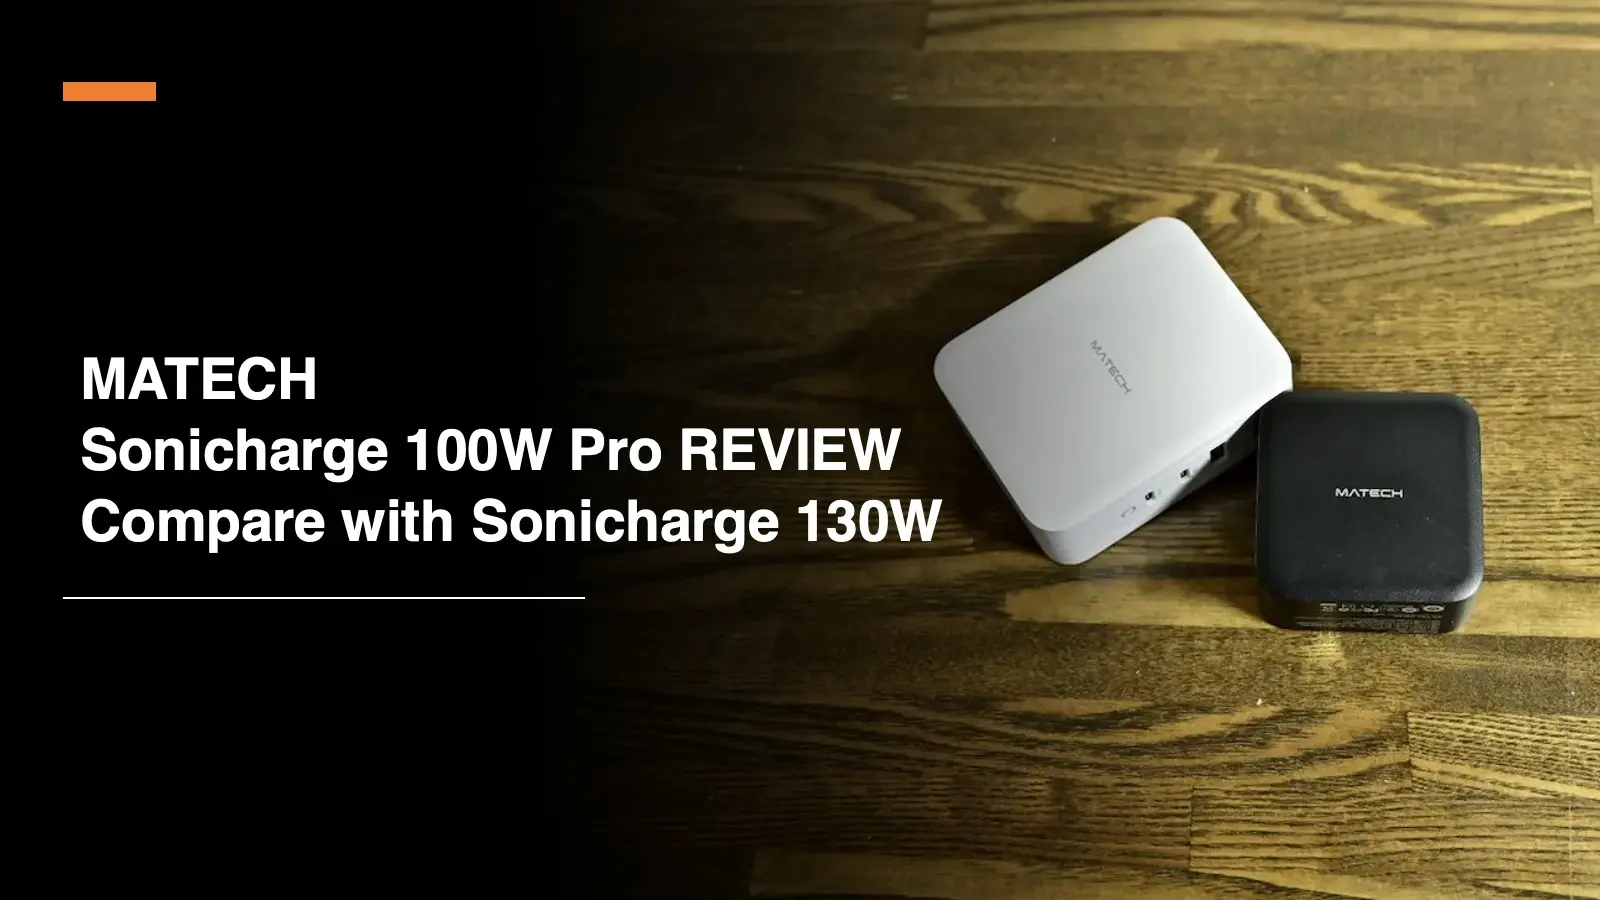 MATECH Sonicharge 100W Pro 3ポート充電器レビュー記事のアイキャッチャー